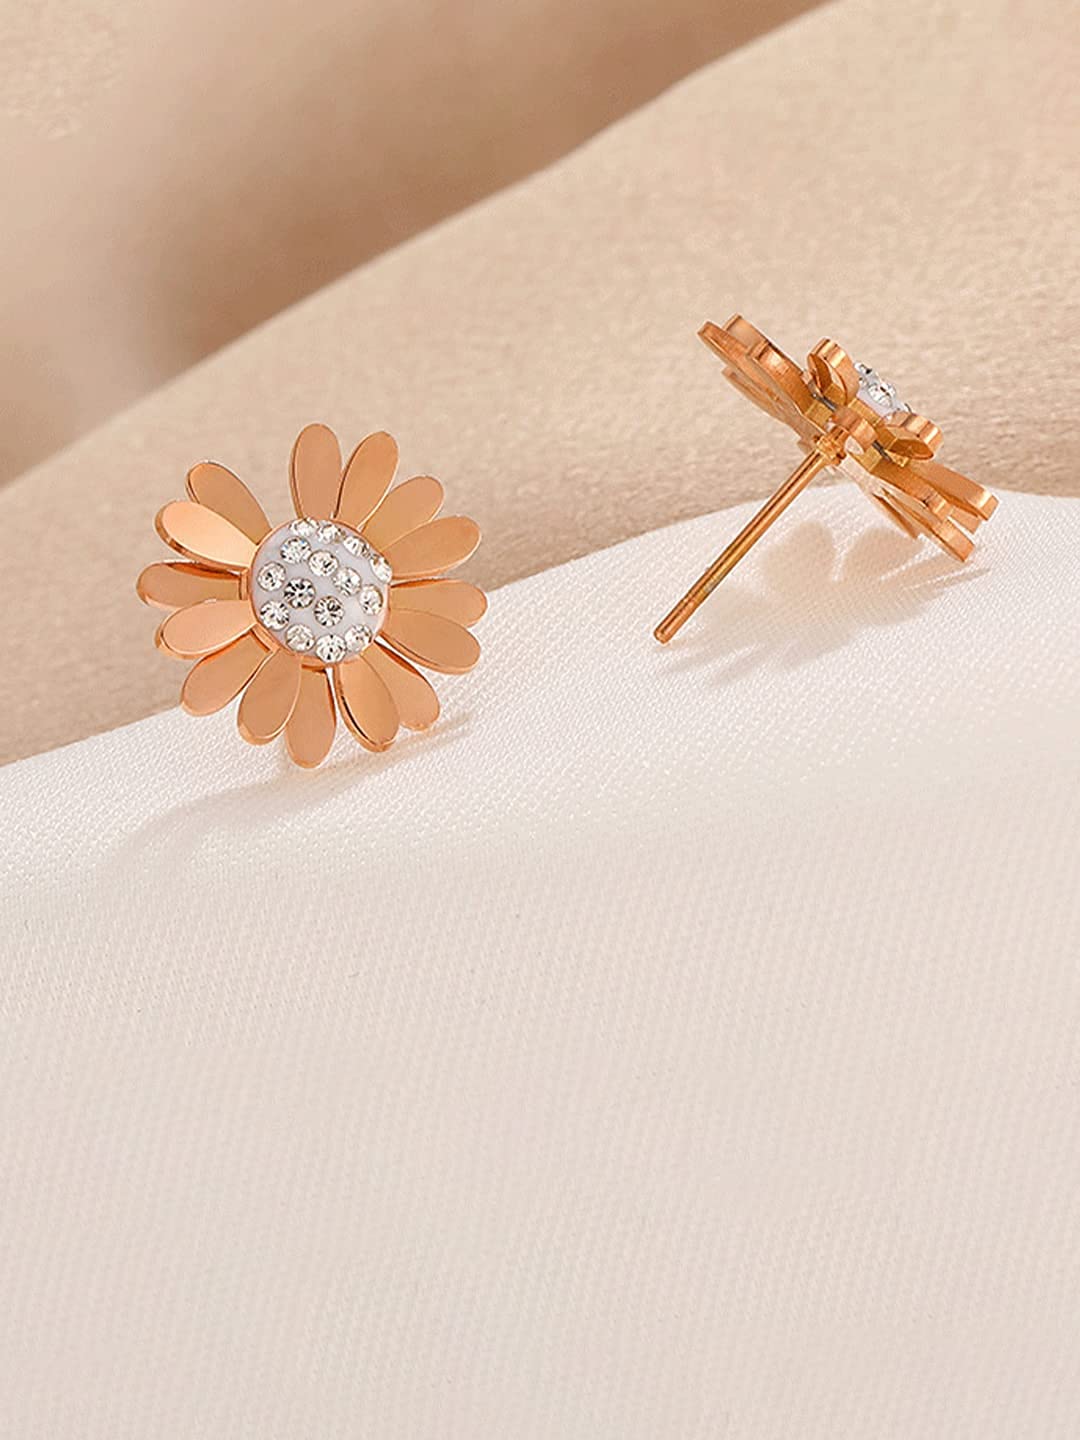 Maeve Floral Stud Earrings - Shop Wedding Jewelry | Dareth Colburn